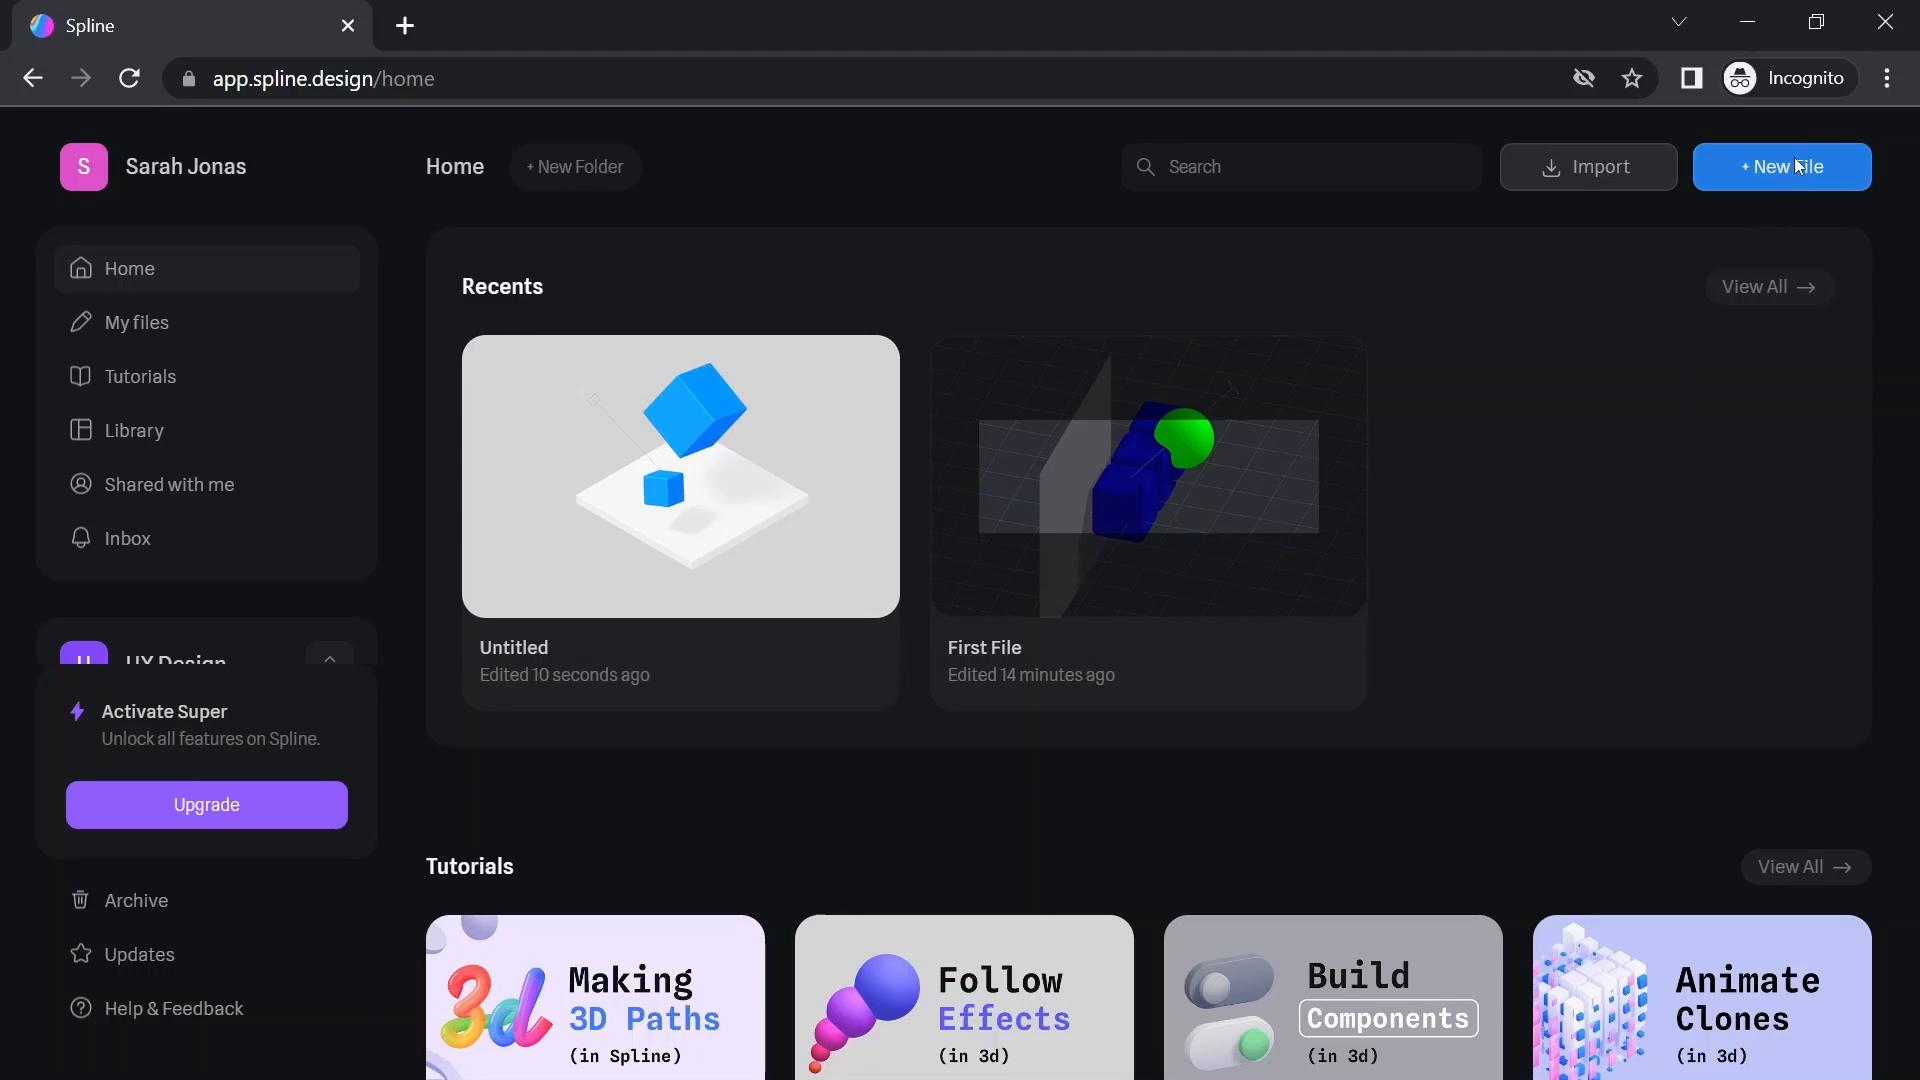 Screenshot of Creating a design on Spline